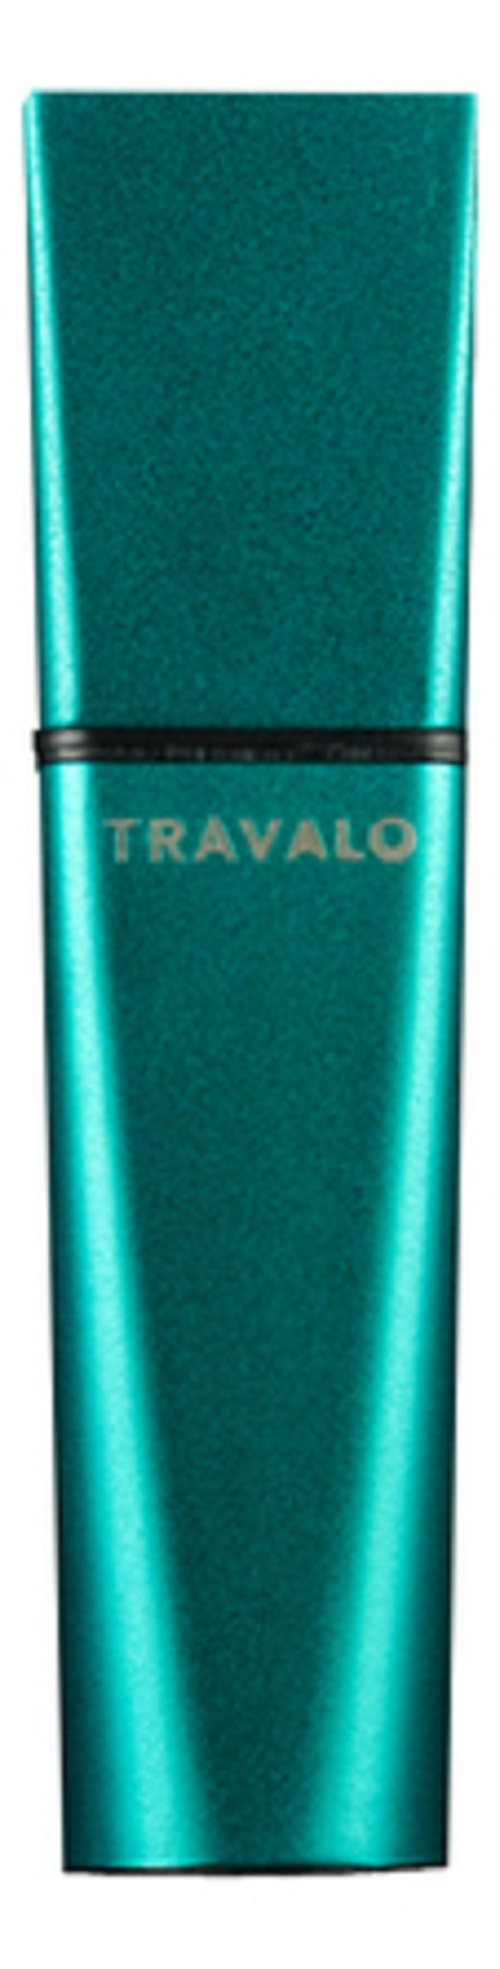 Атомайзер Travalo Obscura Perfume Spray 5мл Green набор travalo milano refillable perfume spray сменная капсула 3х5мл футляр orange